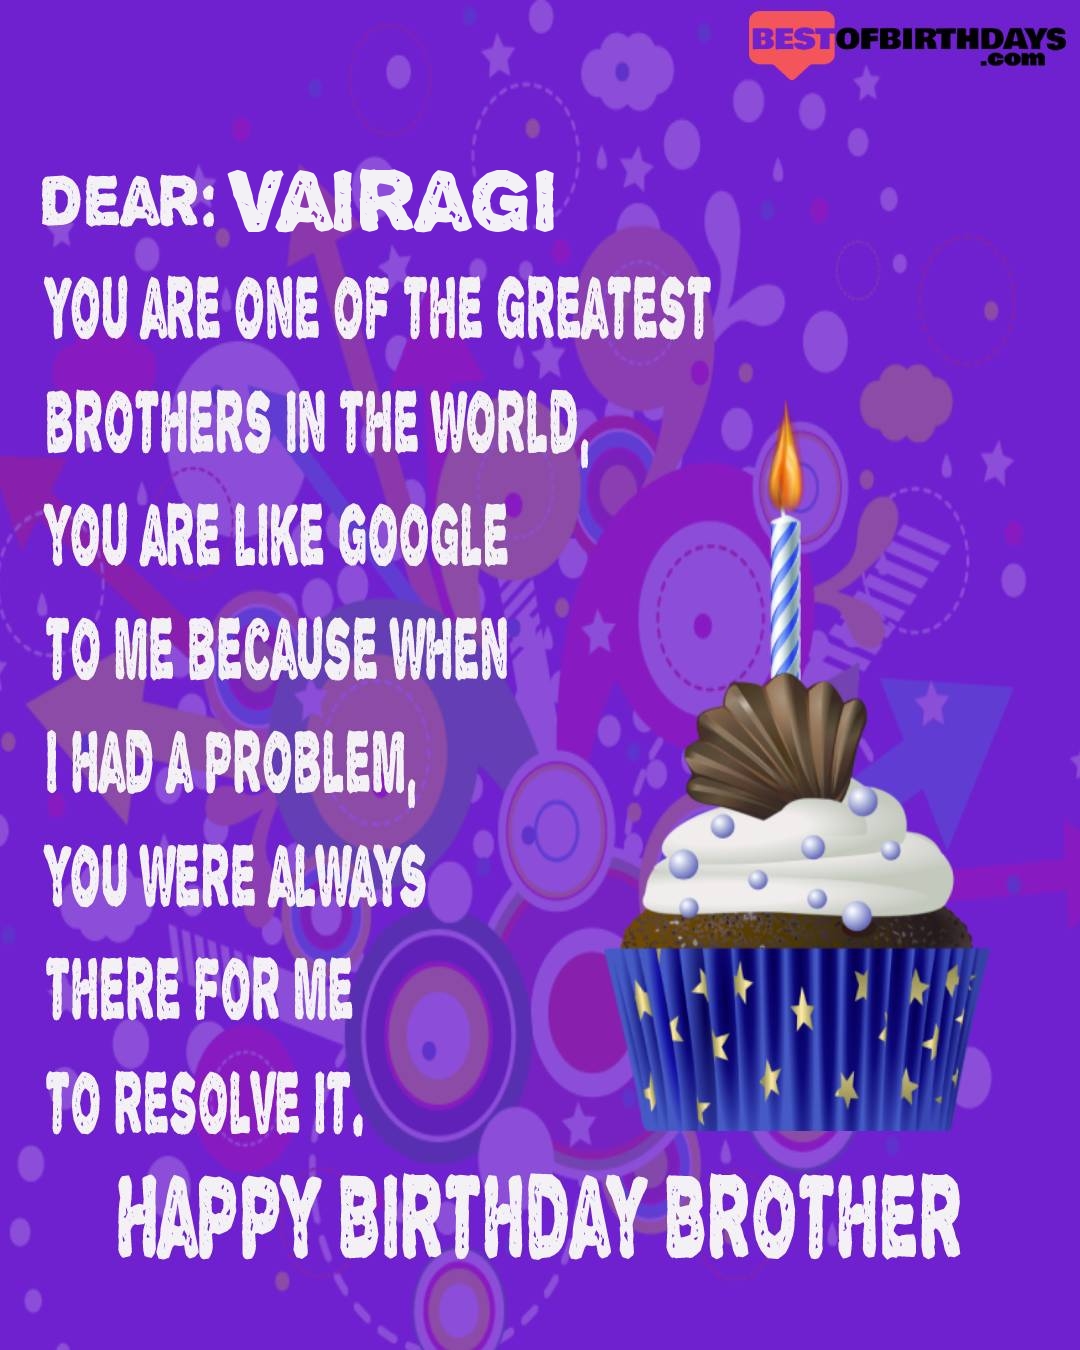 Happy birthday vairagi bhai brother bro